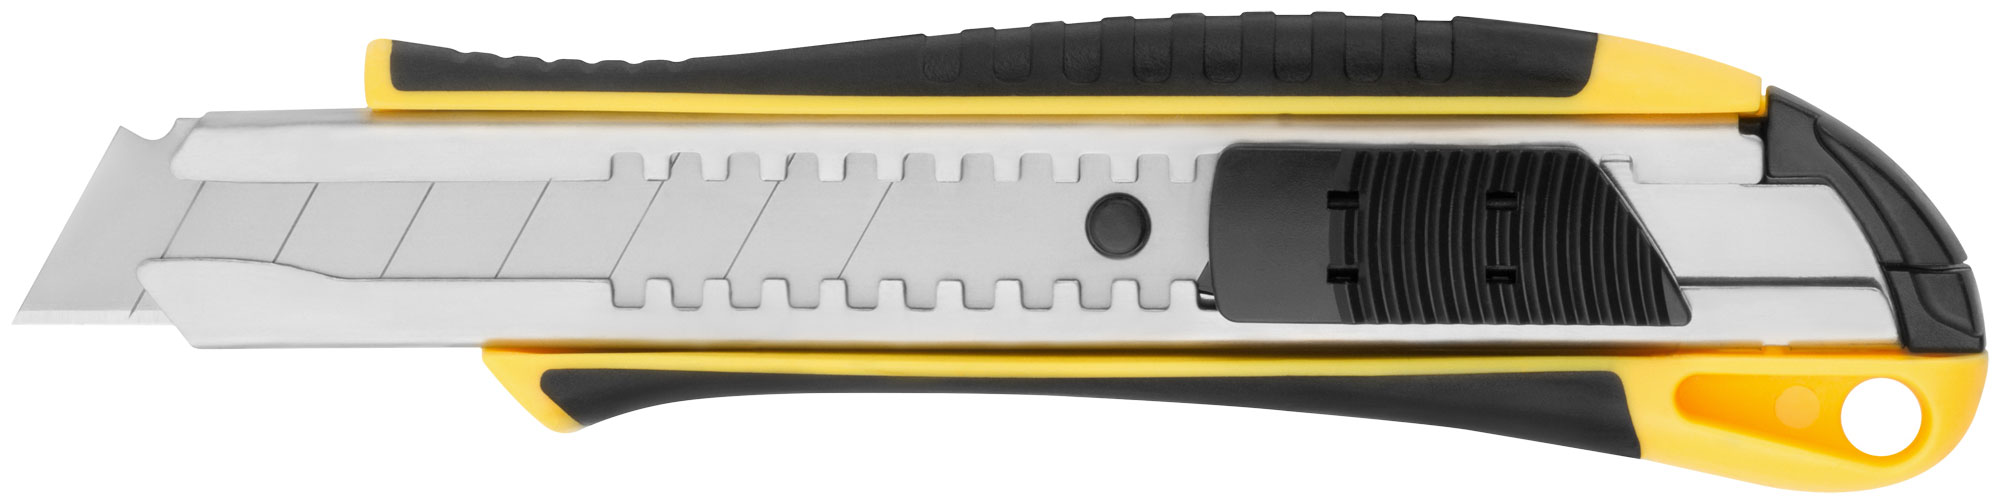 FIT IT  Нож технический 18 мм усиленный прорезиненный, 2-х сторонняя автофиксация усиленный технический нож fit